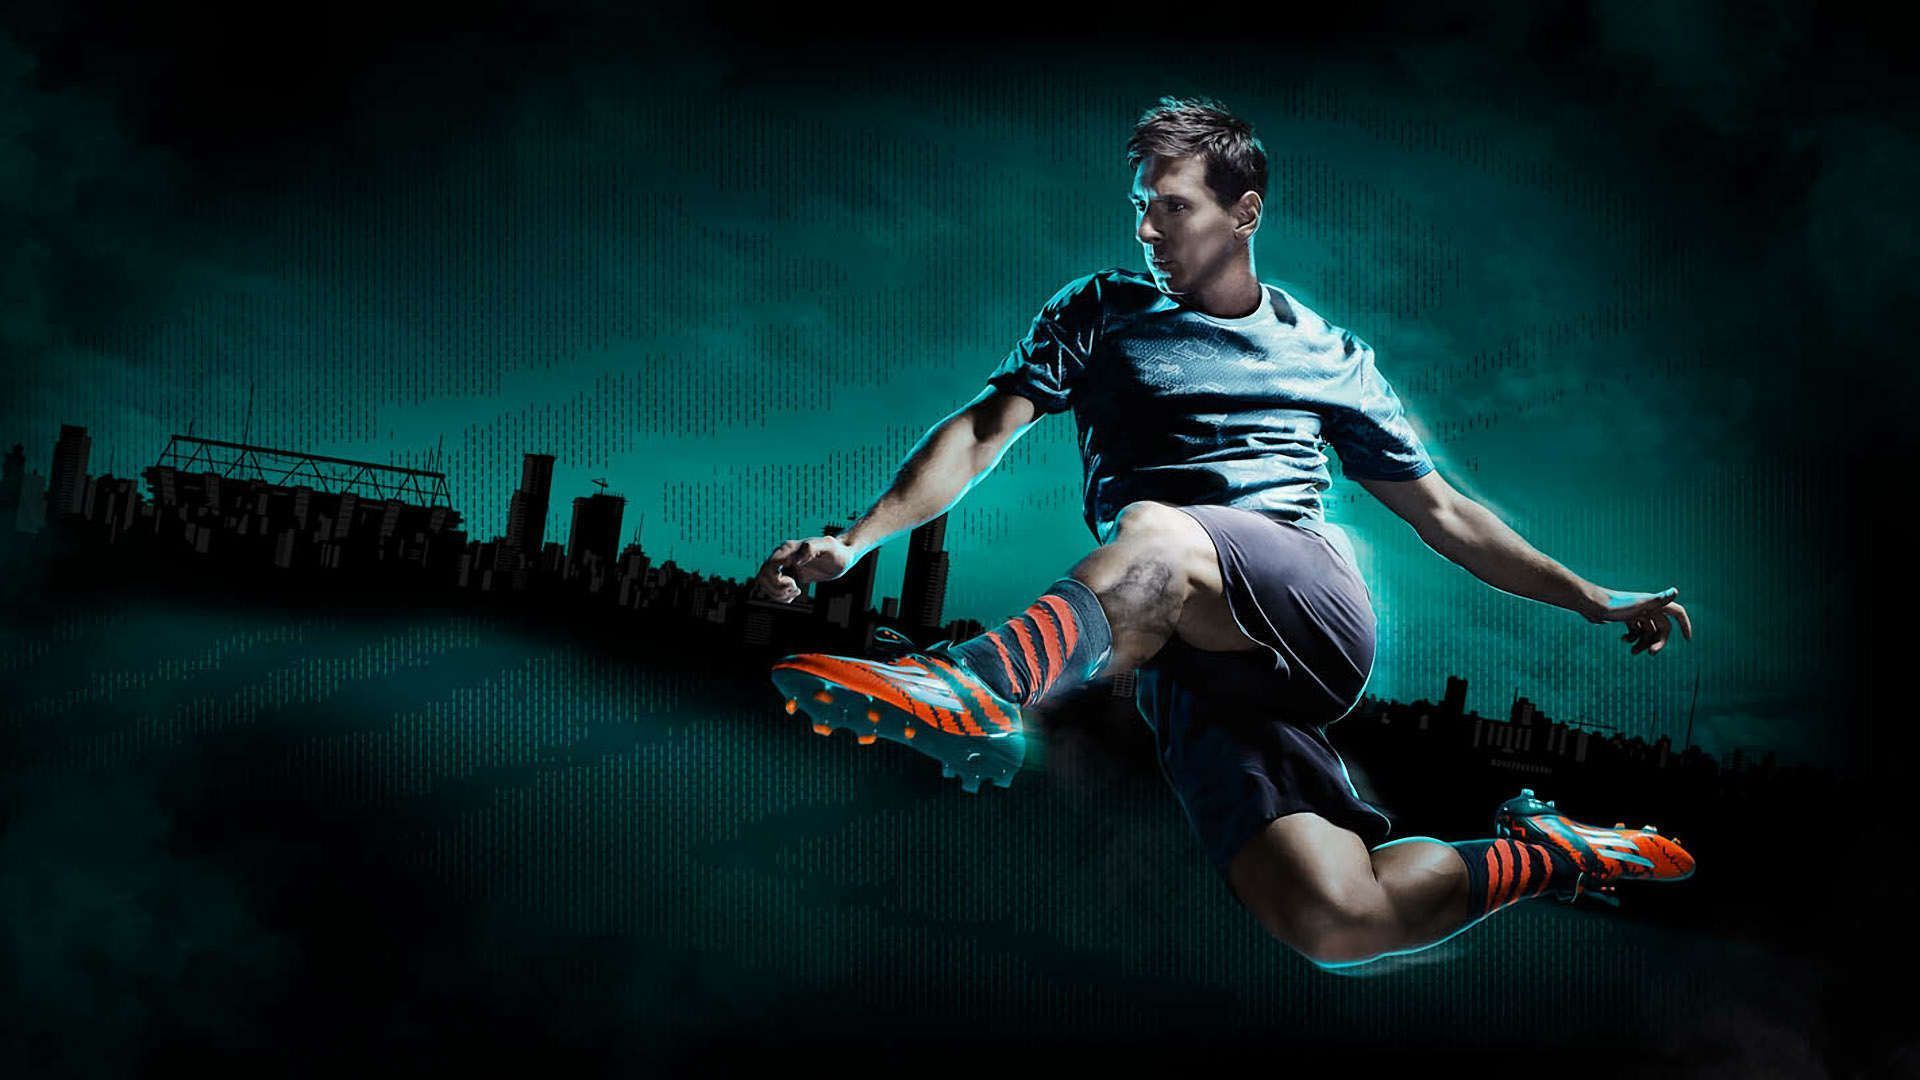 Leo Messi 2015 Adidas Mirosar10 Wallpaper Download